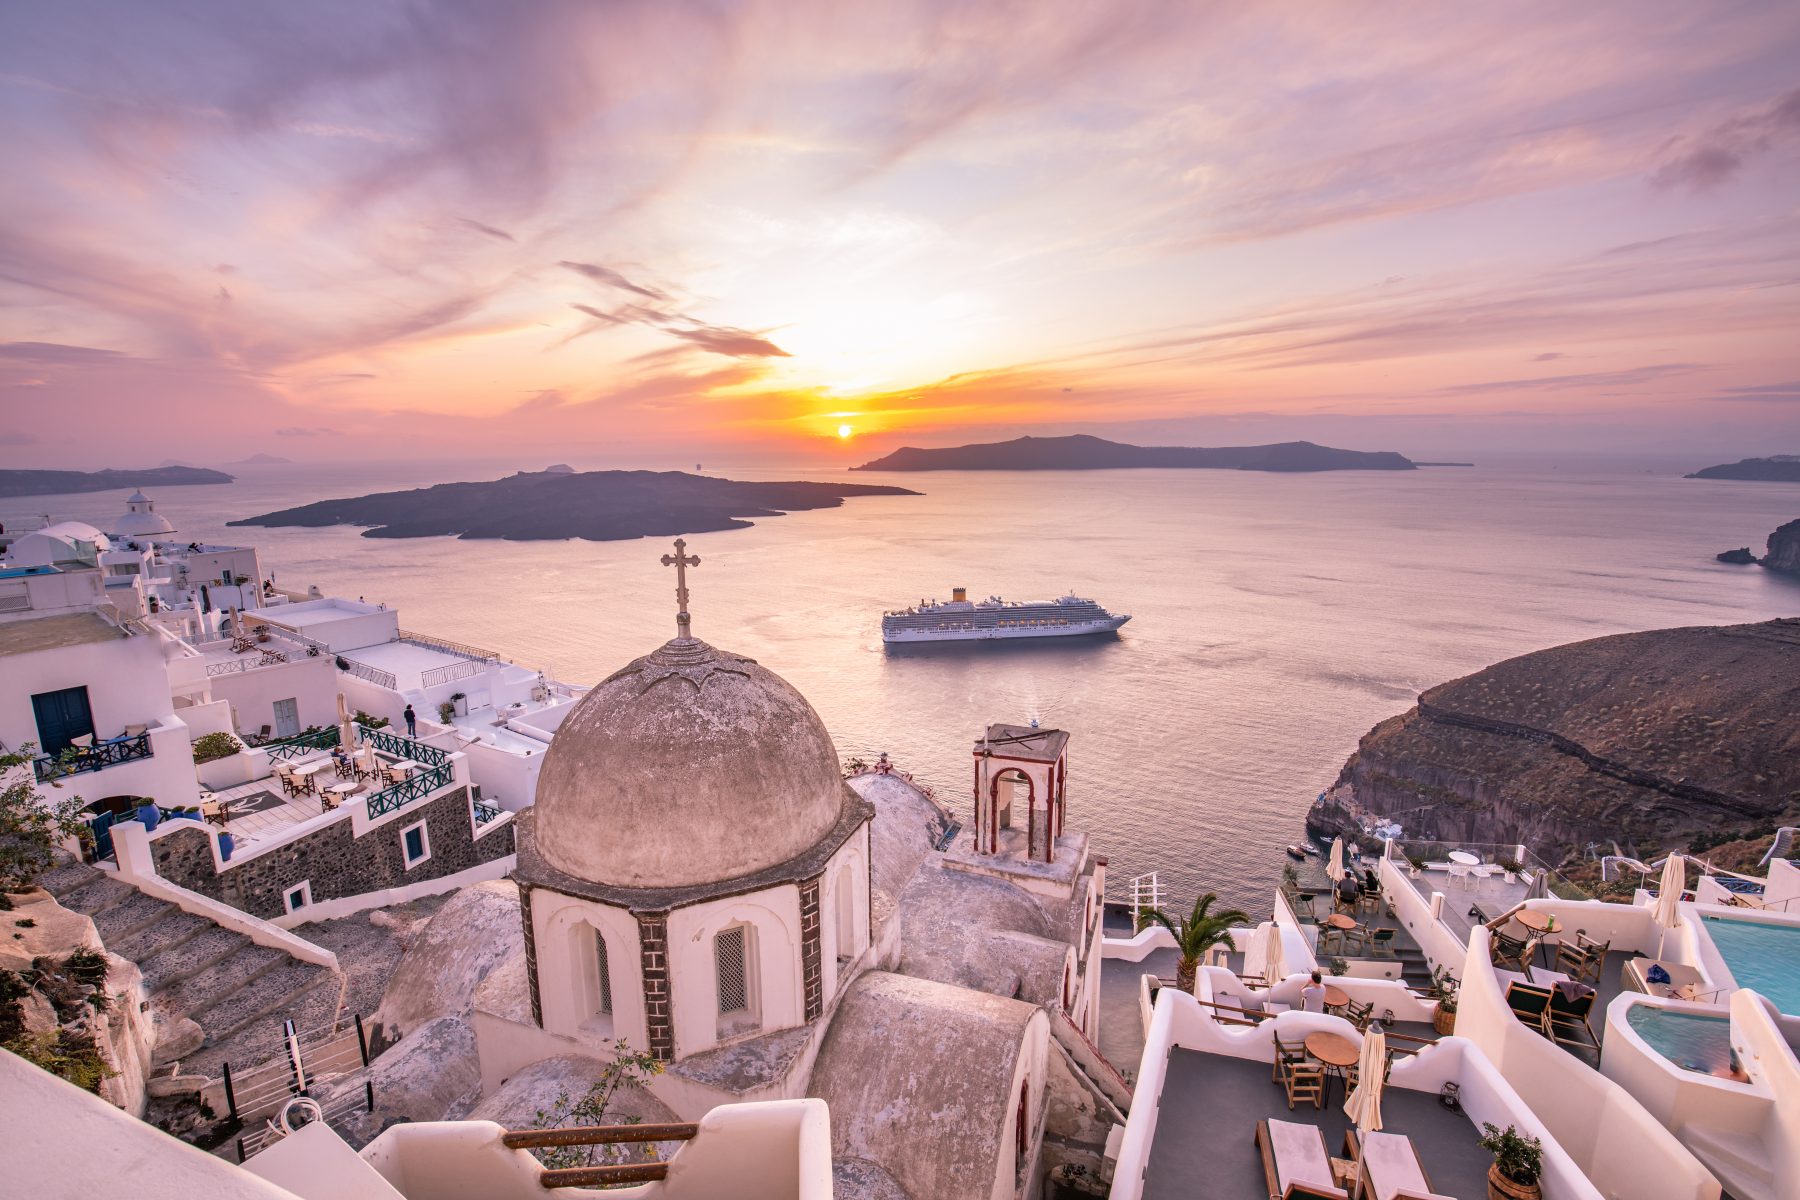 Save on cruises with Costco Travel | Million Mile Secrets